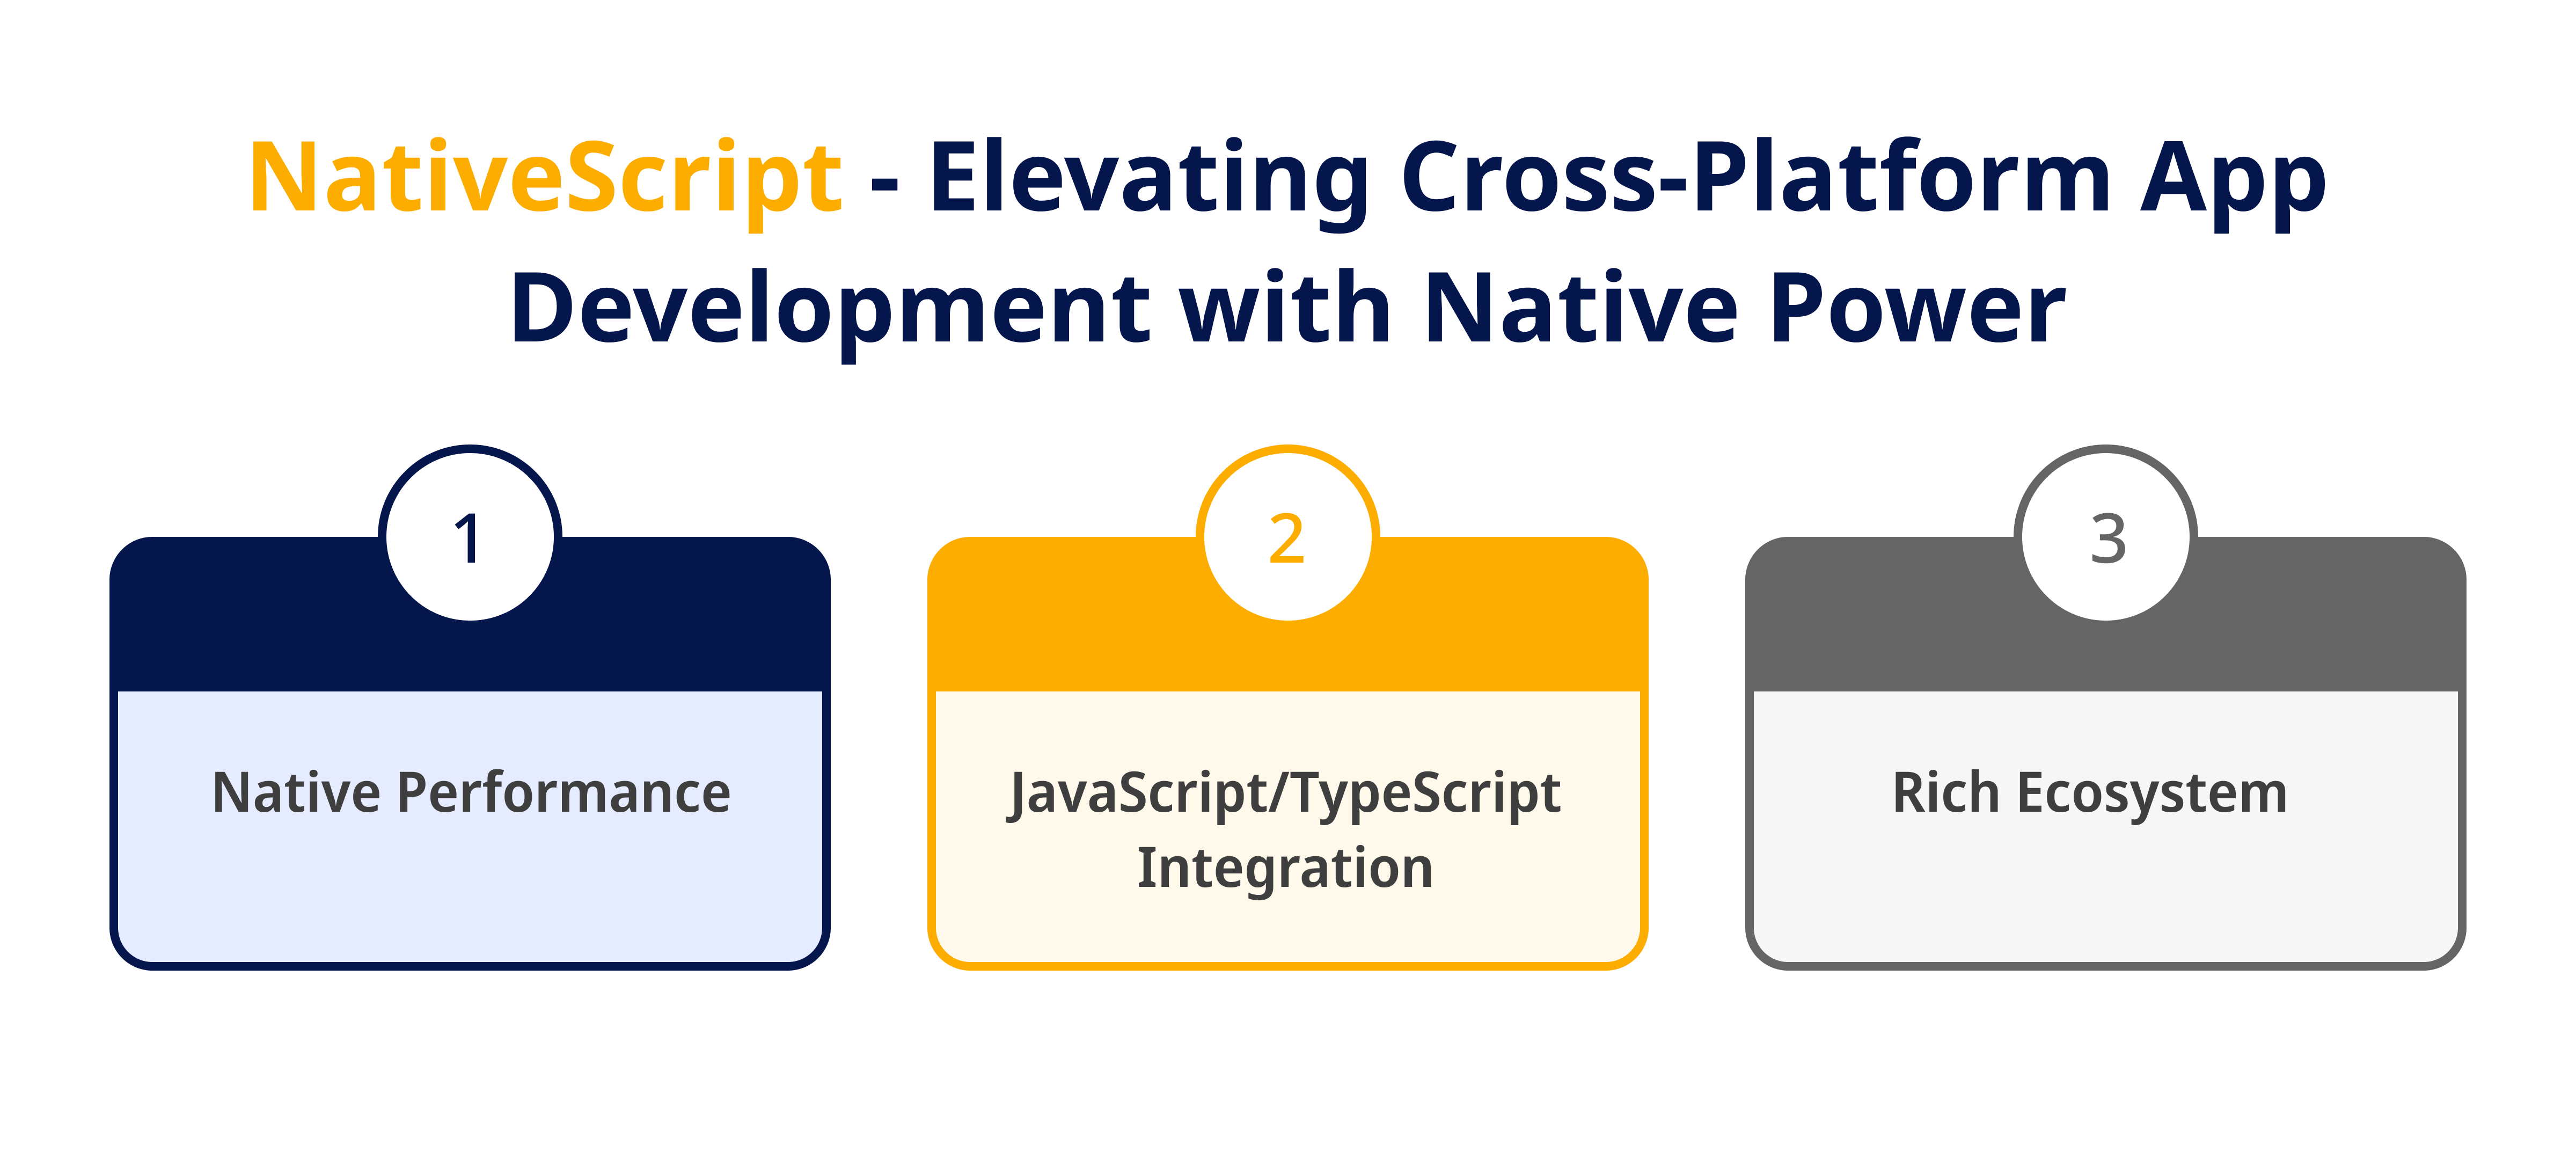 NativeScript Elevating Cross Platform App Development with Native Power